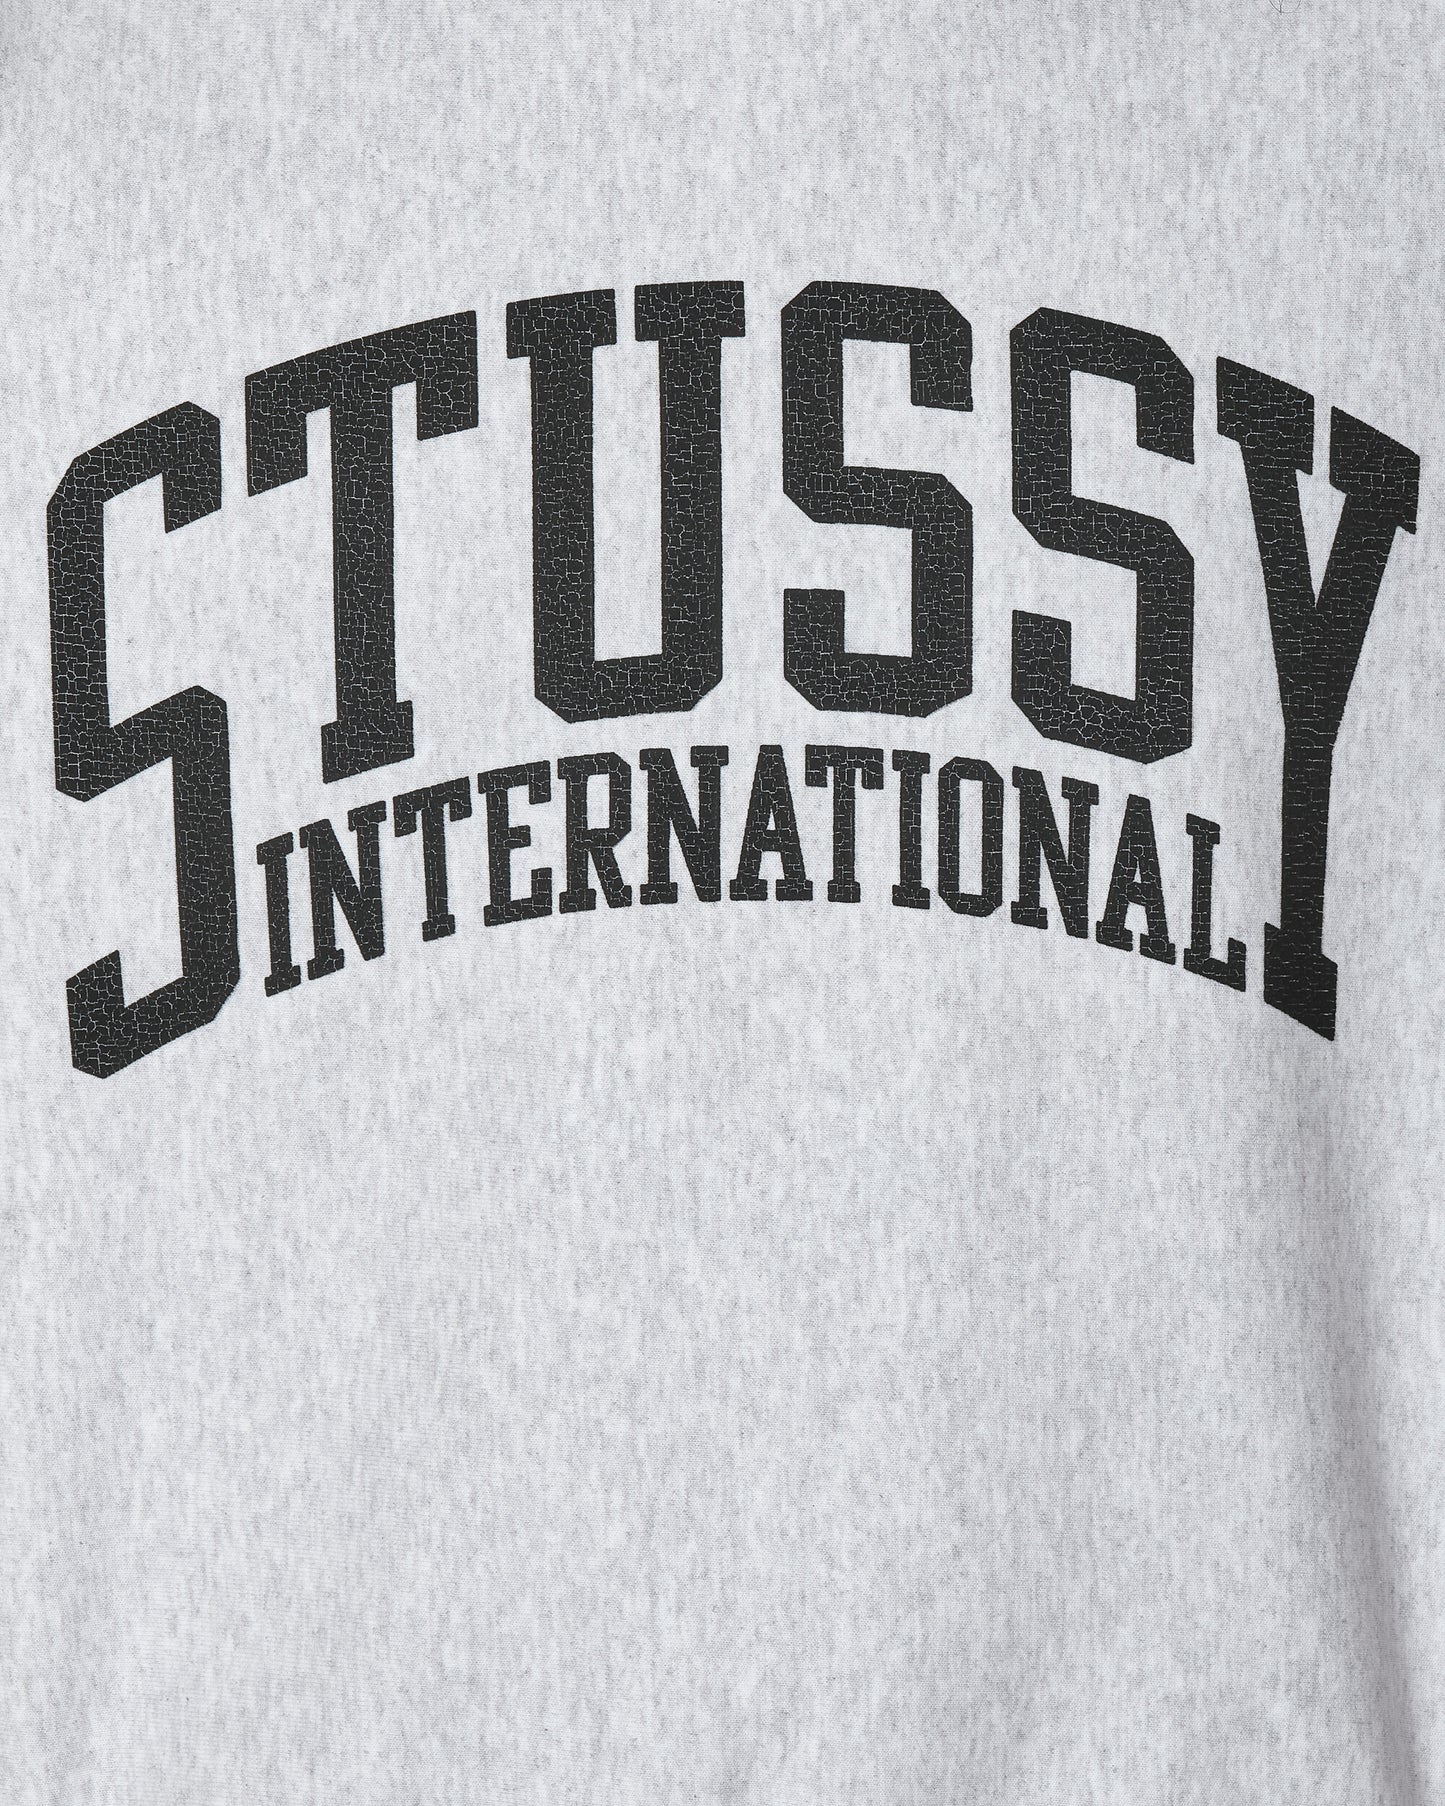 Stüssy Stussy International Crew Ash Heather Sweatshirts Crewneck 1915003 0062